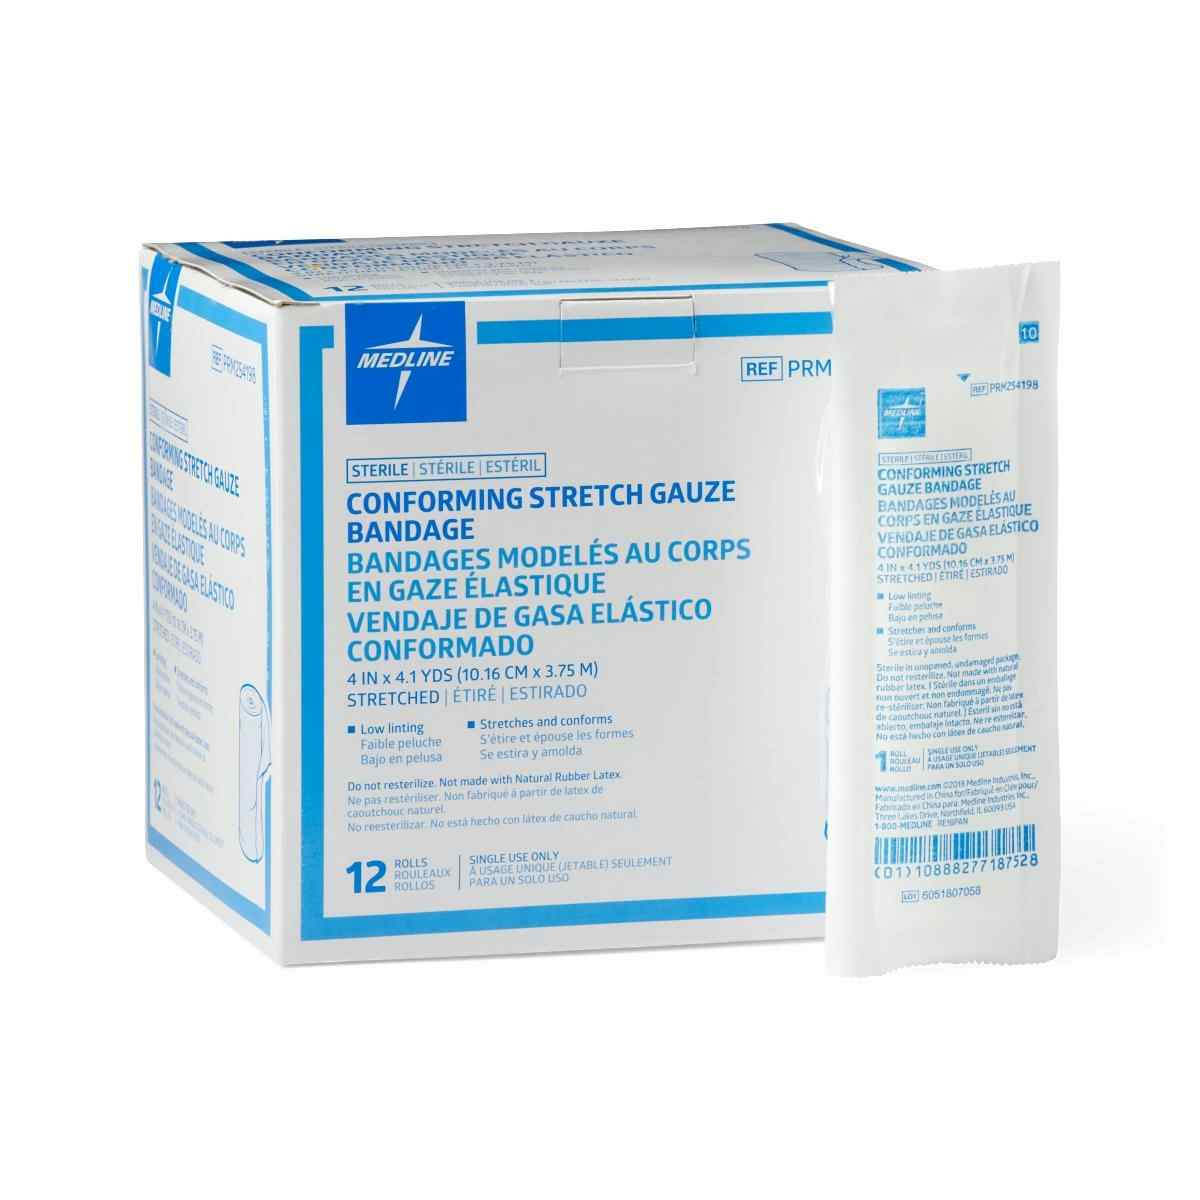 Medline Conforming Stretch Gauze Bandages, Light Weight, PRM254198Z, 4" X 4.1 yd. - Box of 12